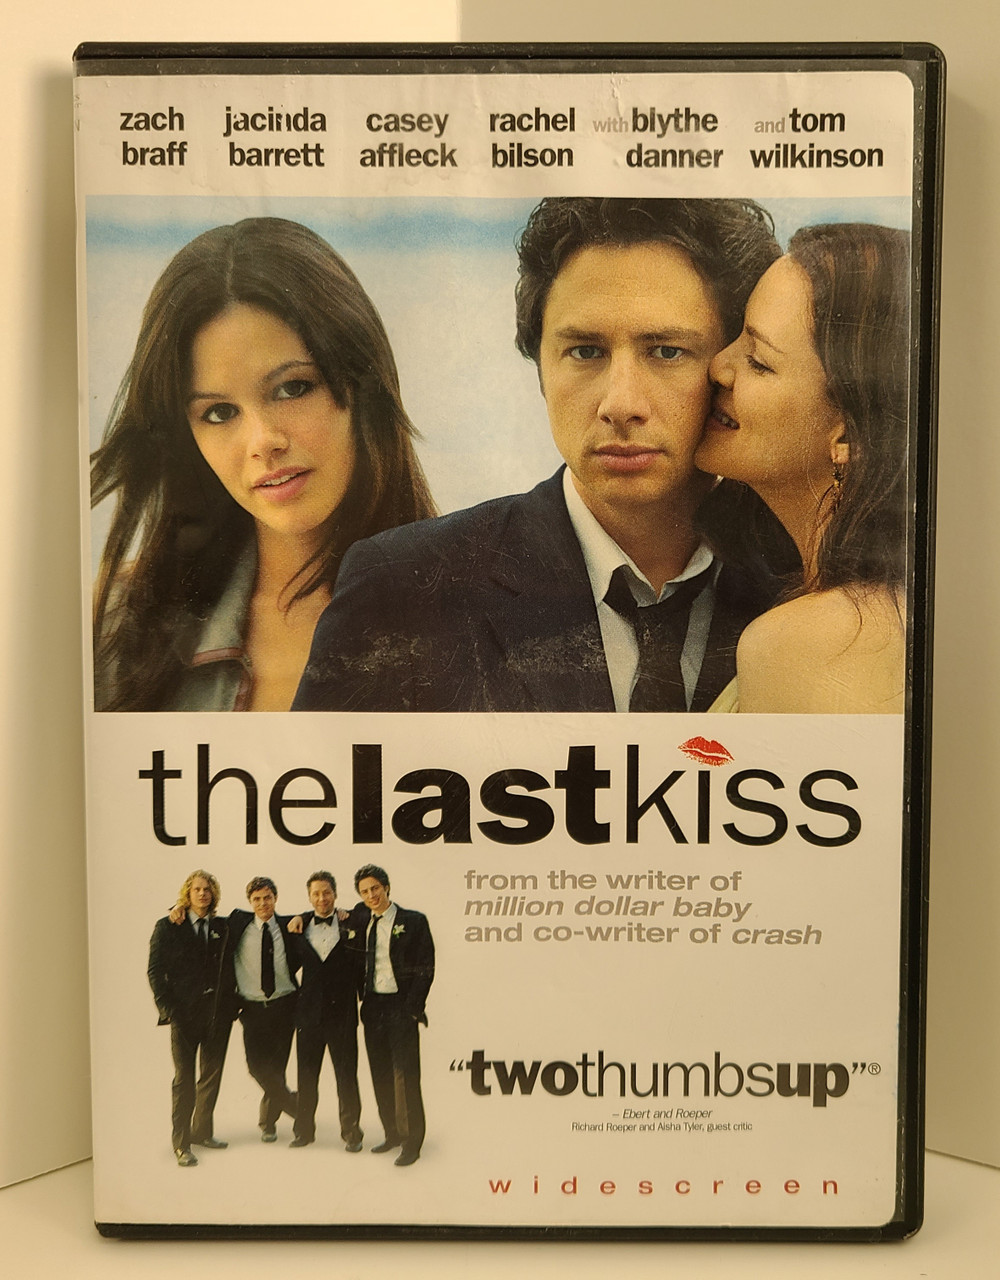 The Last Kiss (R)